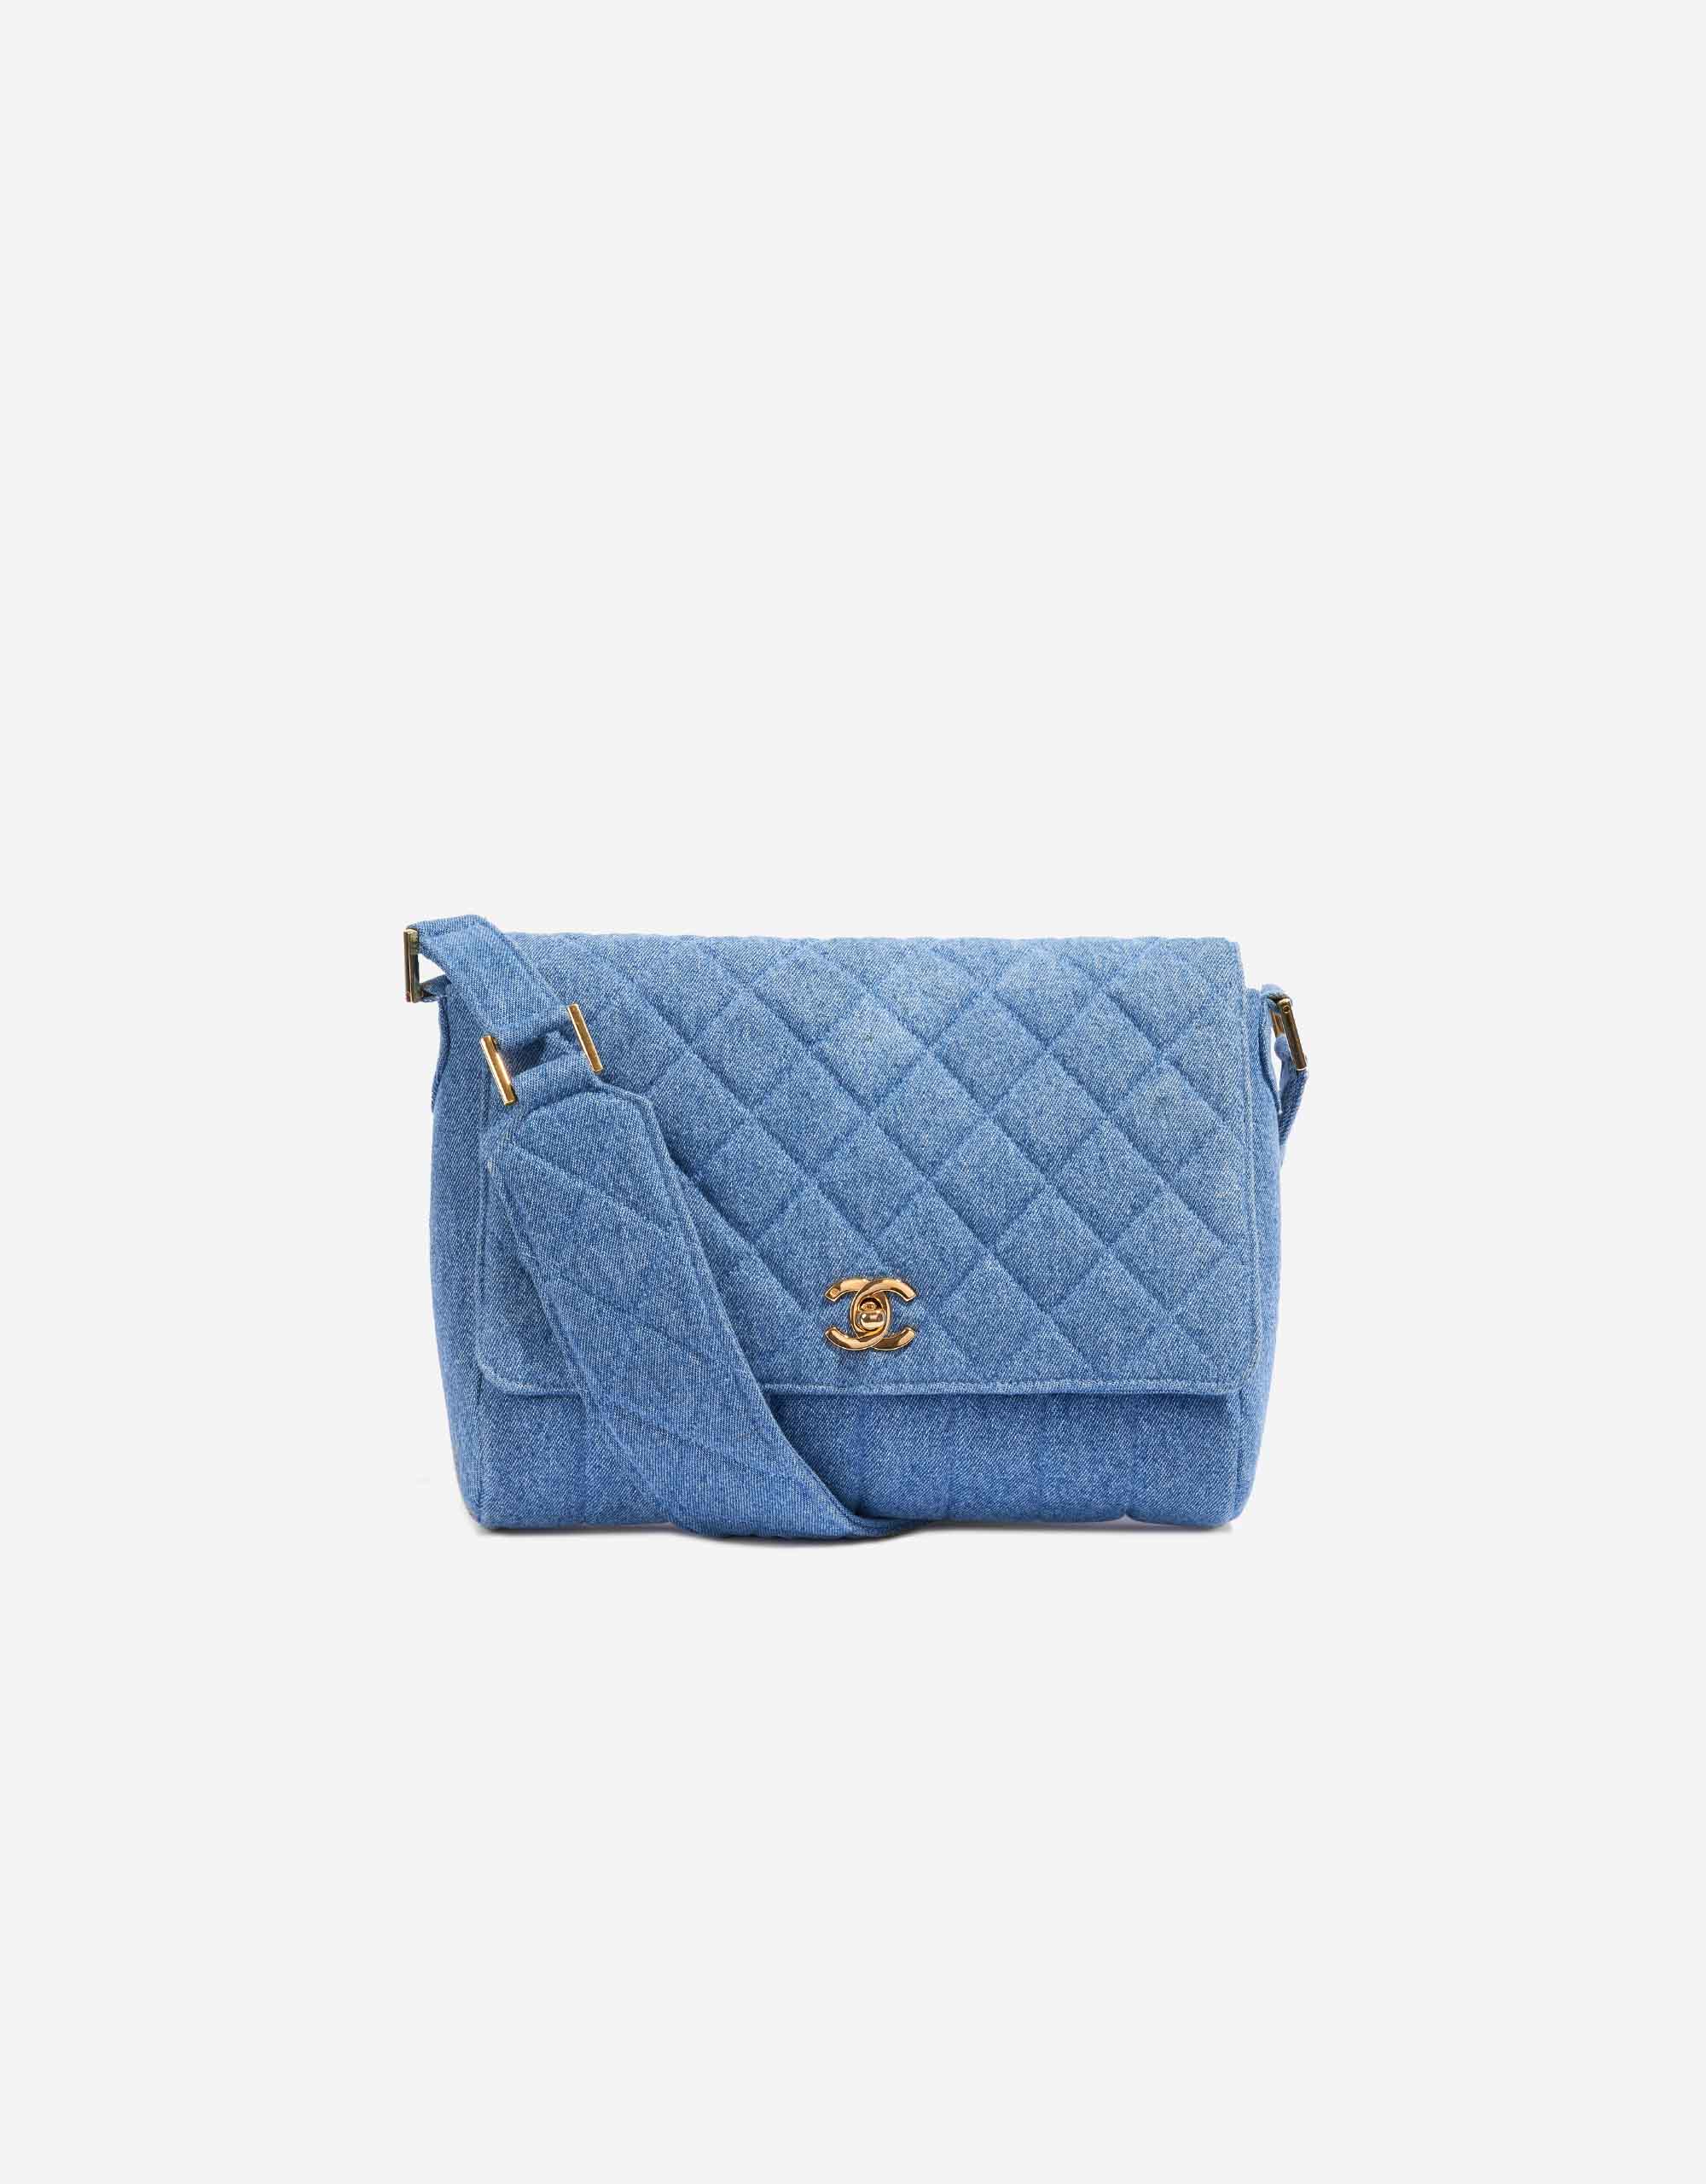 Chanel Vintage Flap Medium Denim Blue